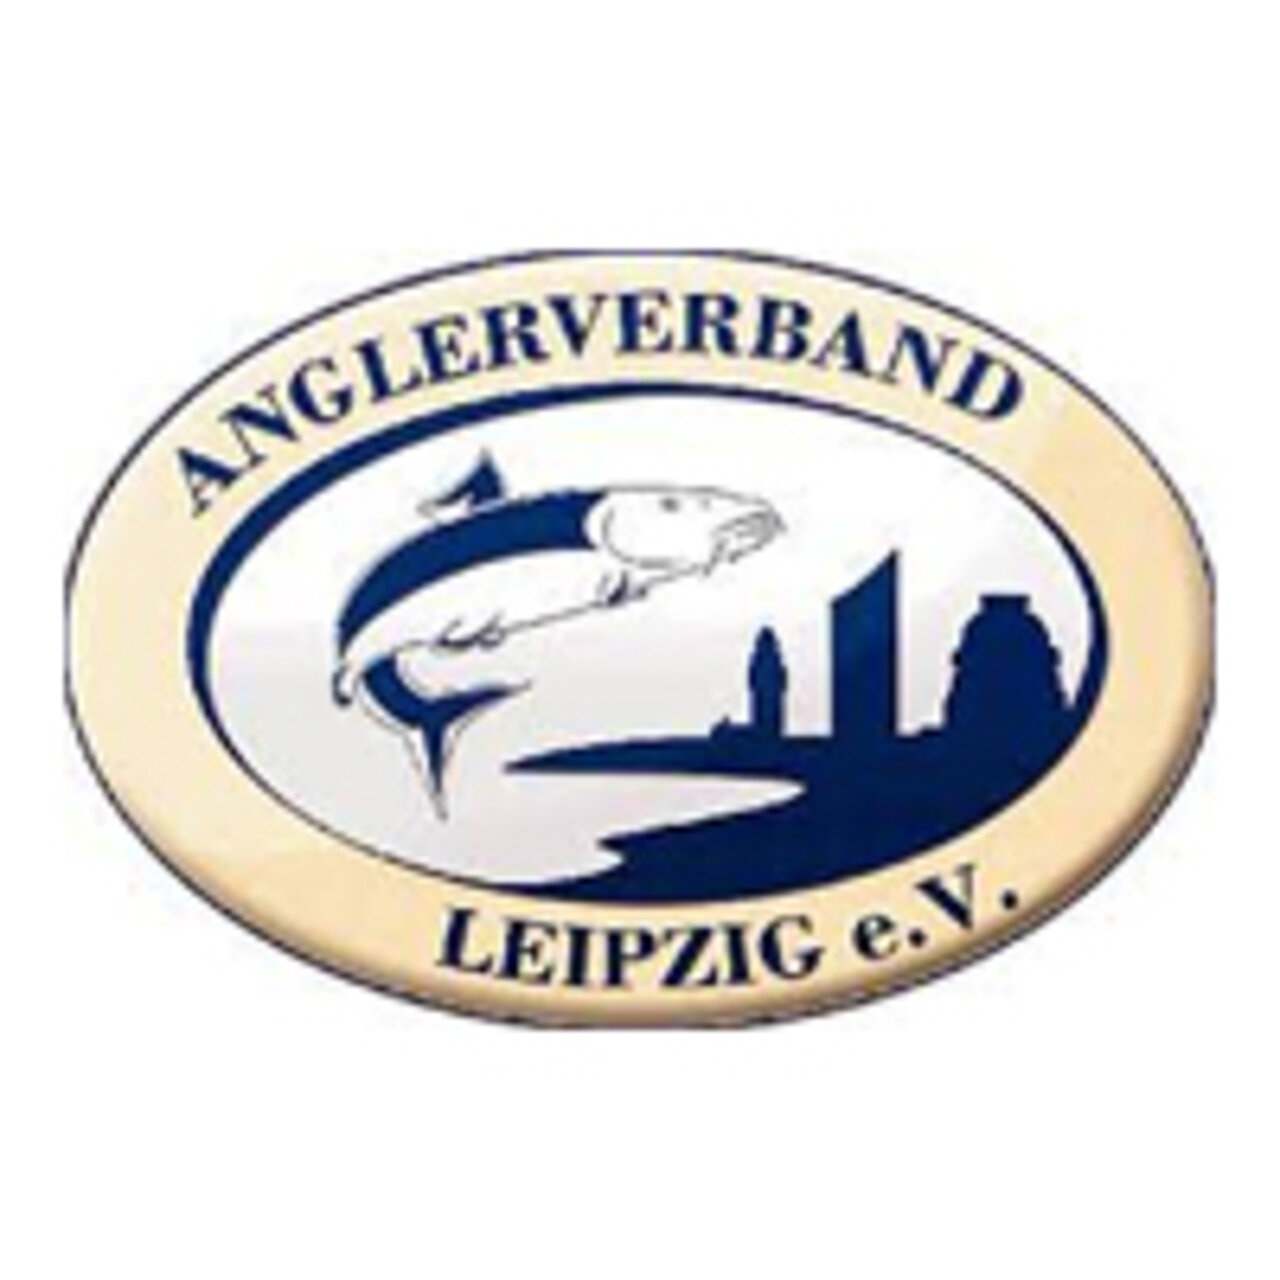 Verbandslogo Anglerverband Leipzig e.V.